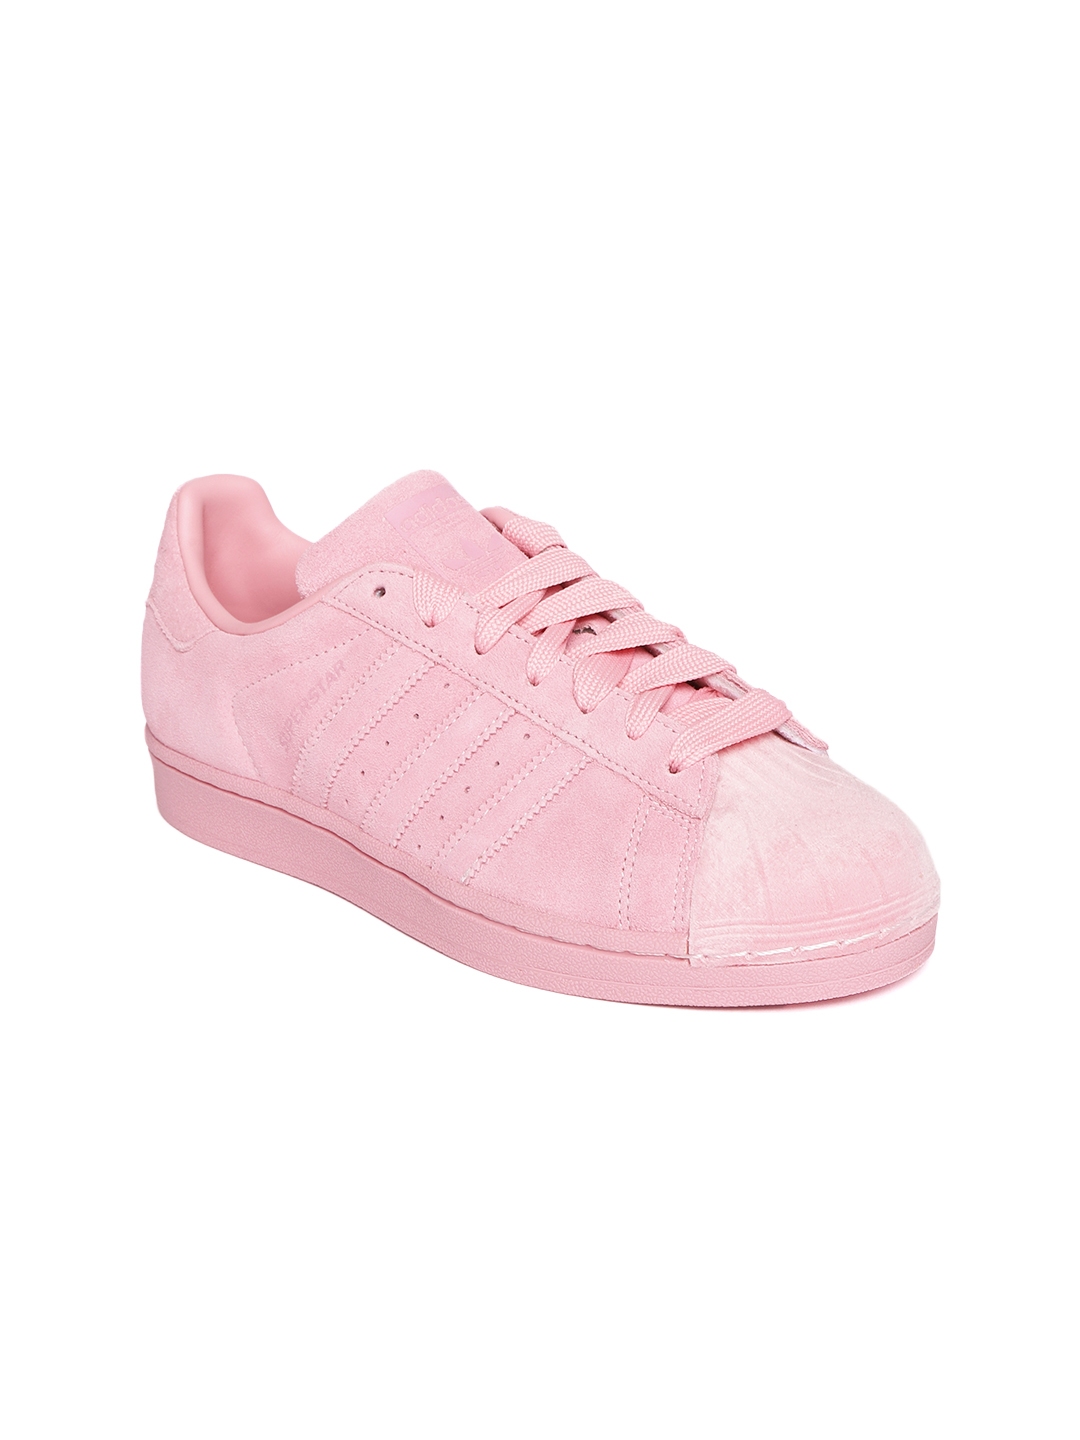 Buy ADIDAS Originals Women Pink Sneakers - Casual Shoes for Women | Myntra